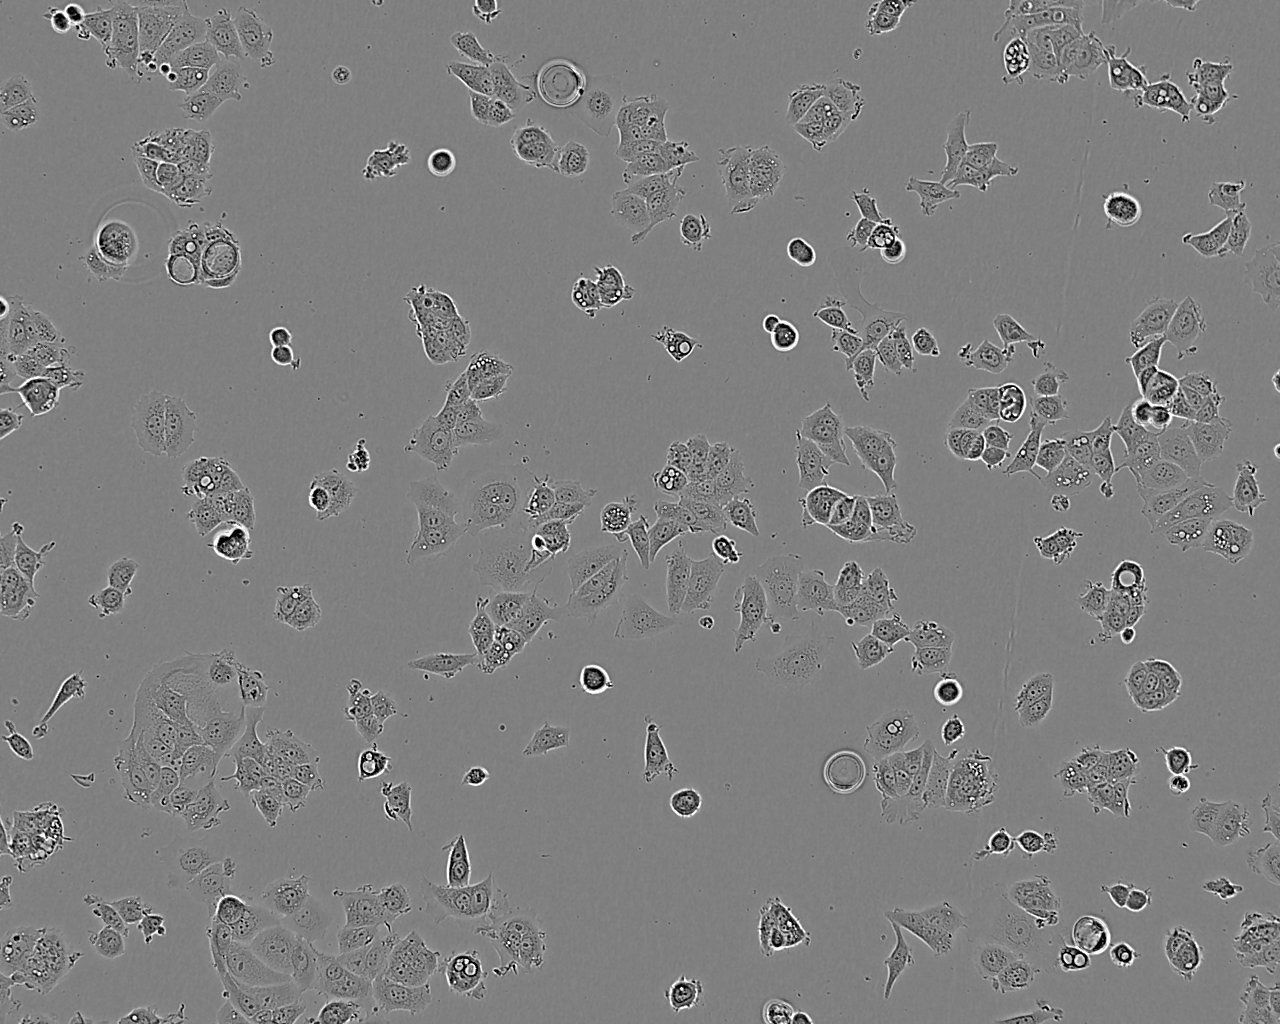 NCI-H2029 epithelioid cells人小细胞肺癌细胞系,NCI-H2029 epithelioid cells